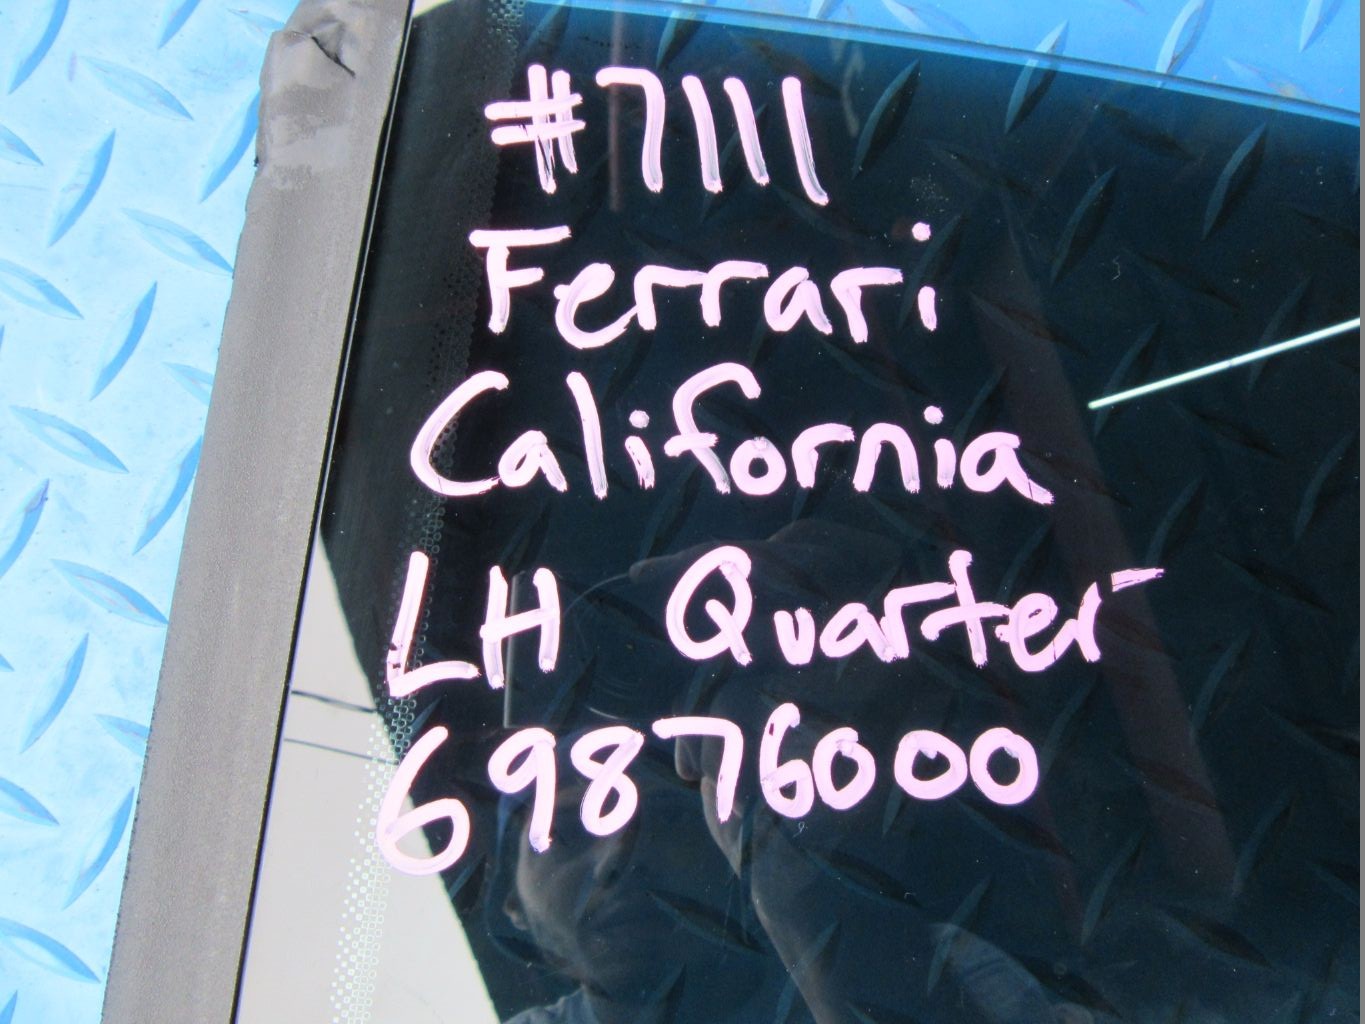 Ferrari California left rear quarter window wind wing glass #7111